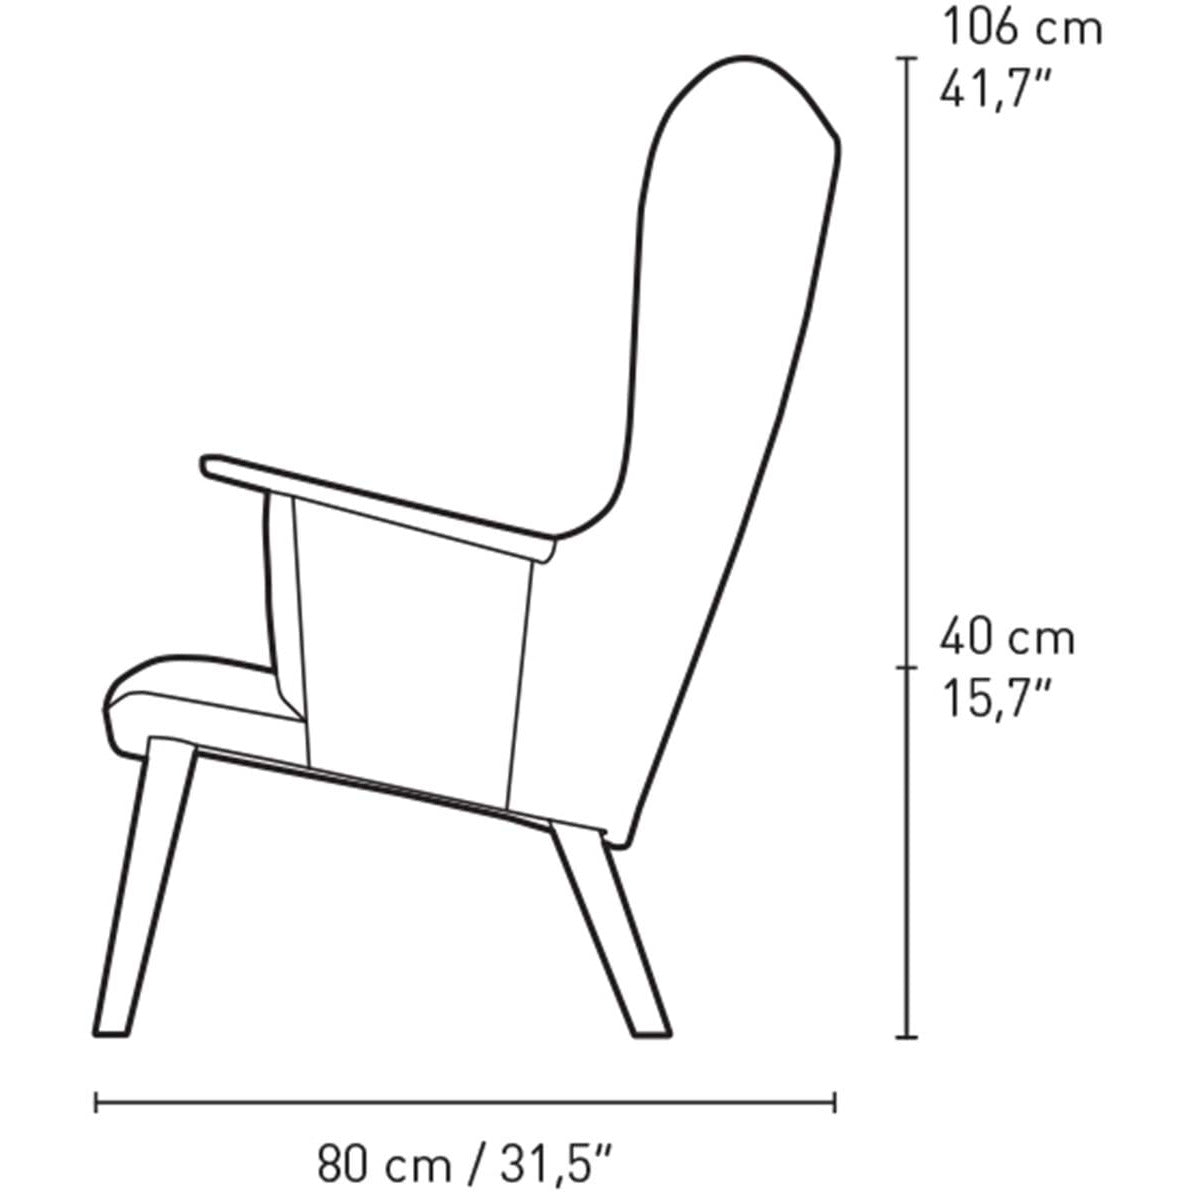 Carl Hansen CH78 Mama Bear Lounge Chair, Oak Soap / Gray Fiord 0151